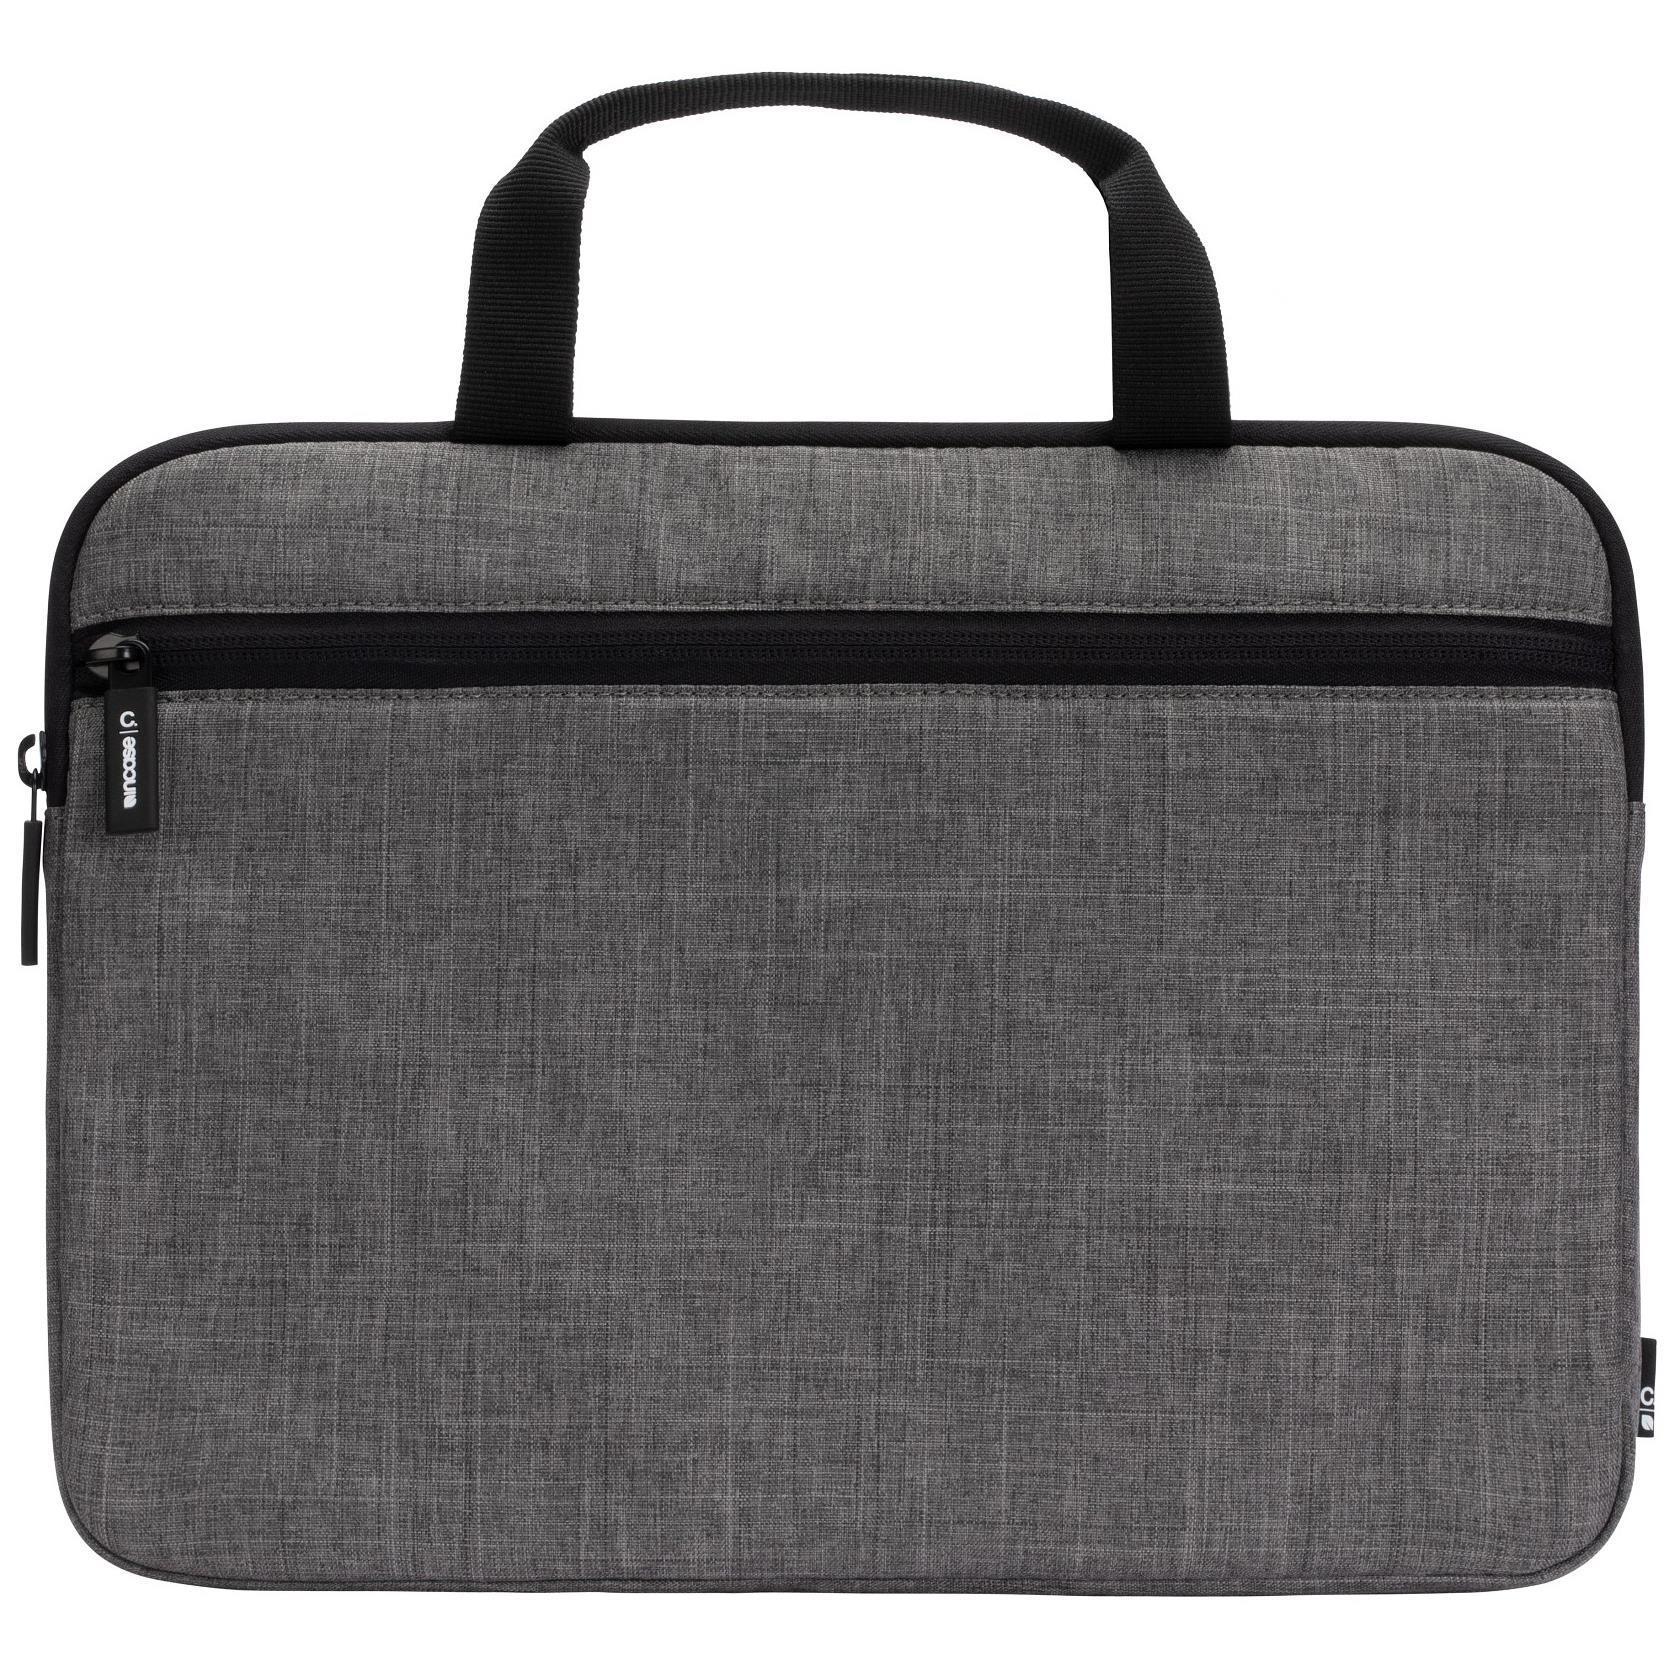 Incase Carry Zip Brief 13" Laptop Sleeve Case - Graphite